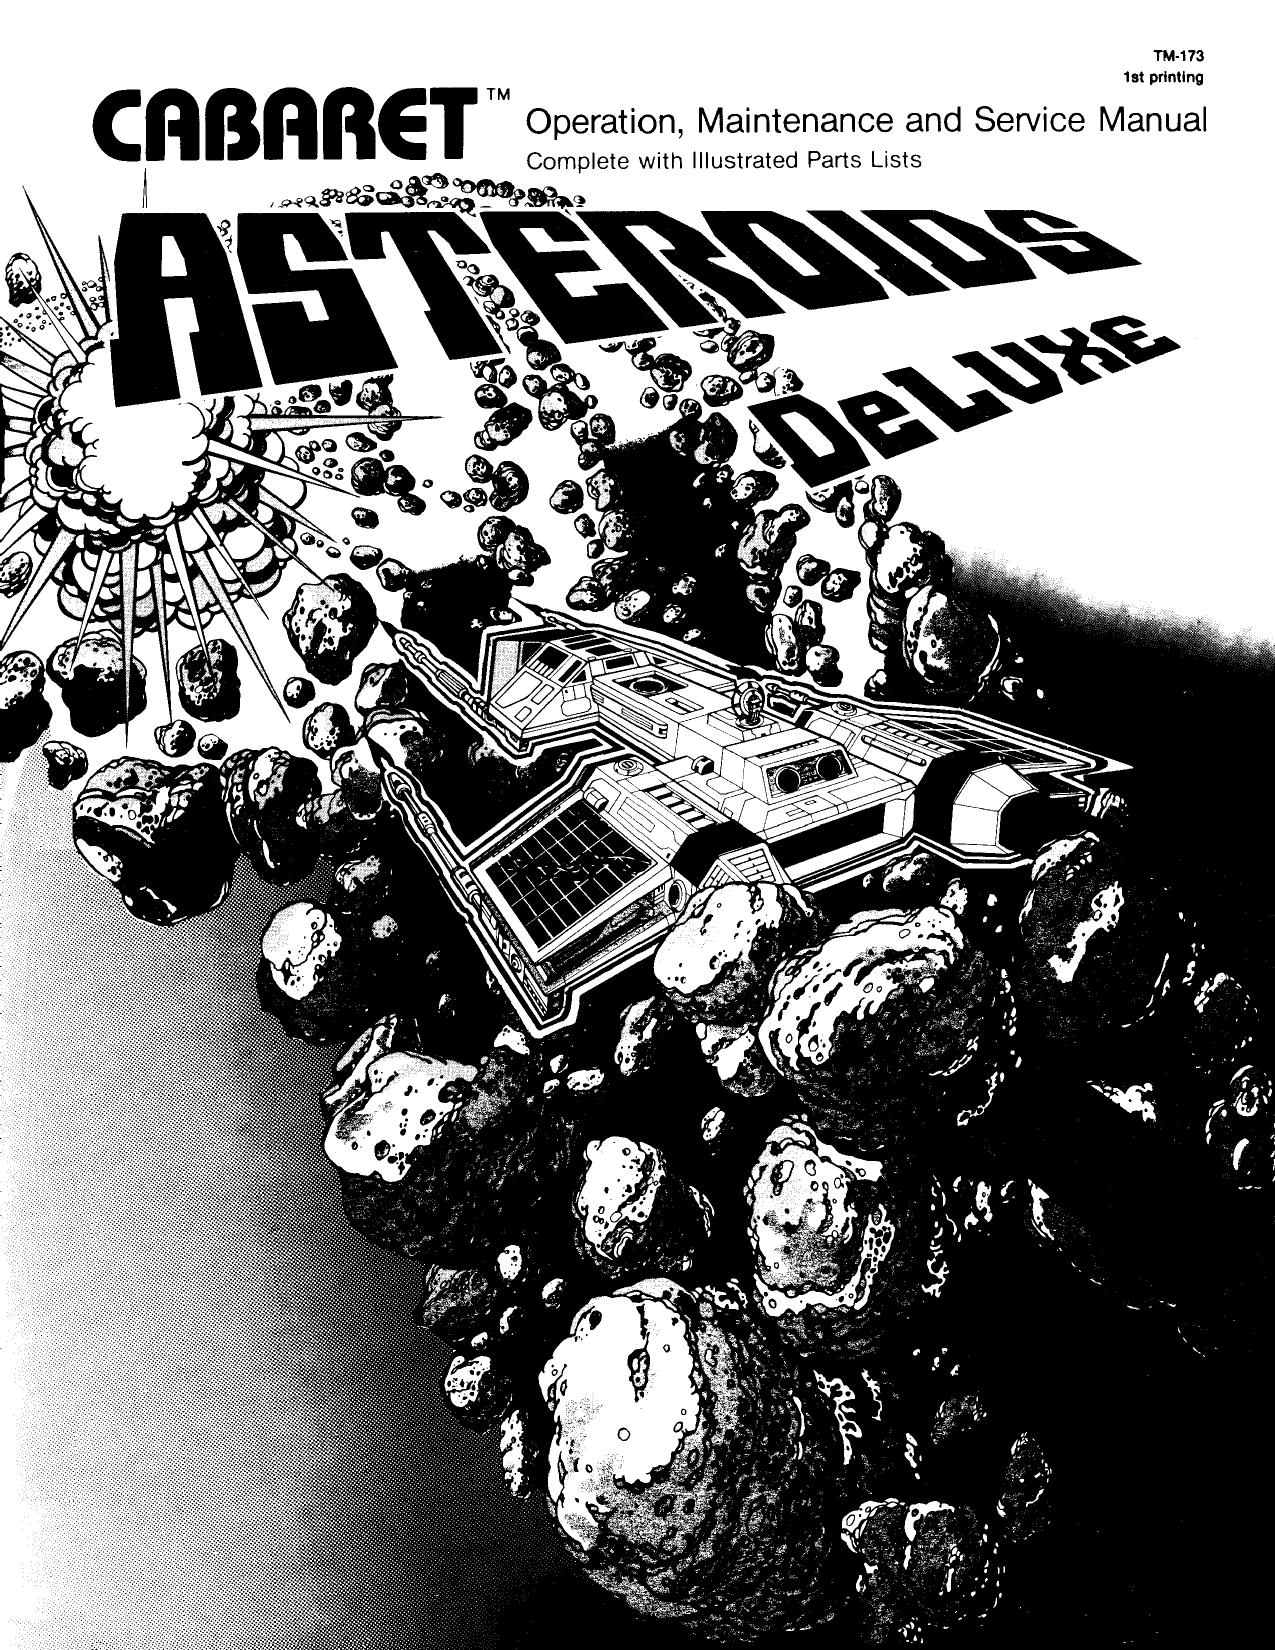 Asteroids Deluxe (Caberat TM-173 1st Printing) (Op-Maint-Serv-Parts) (U)